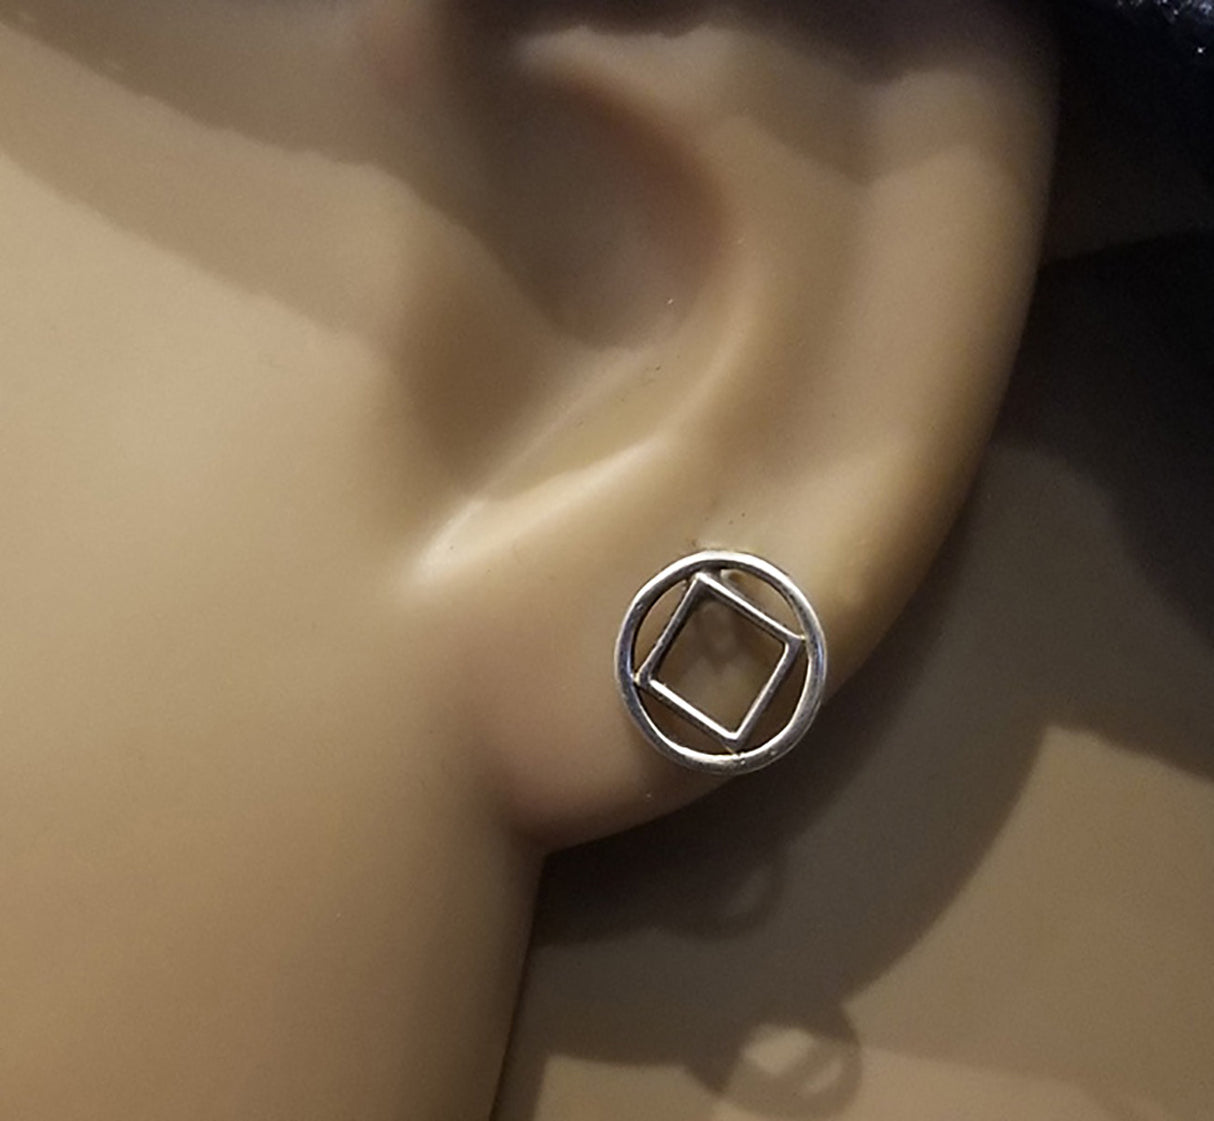 Sterling NA Service Symbol Earrings